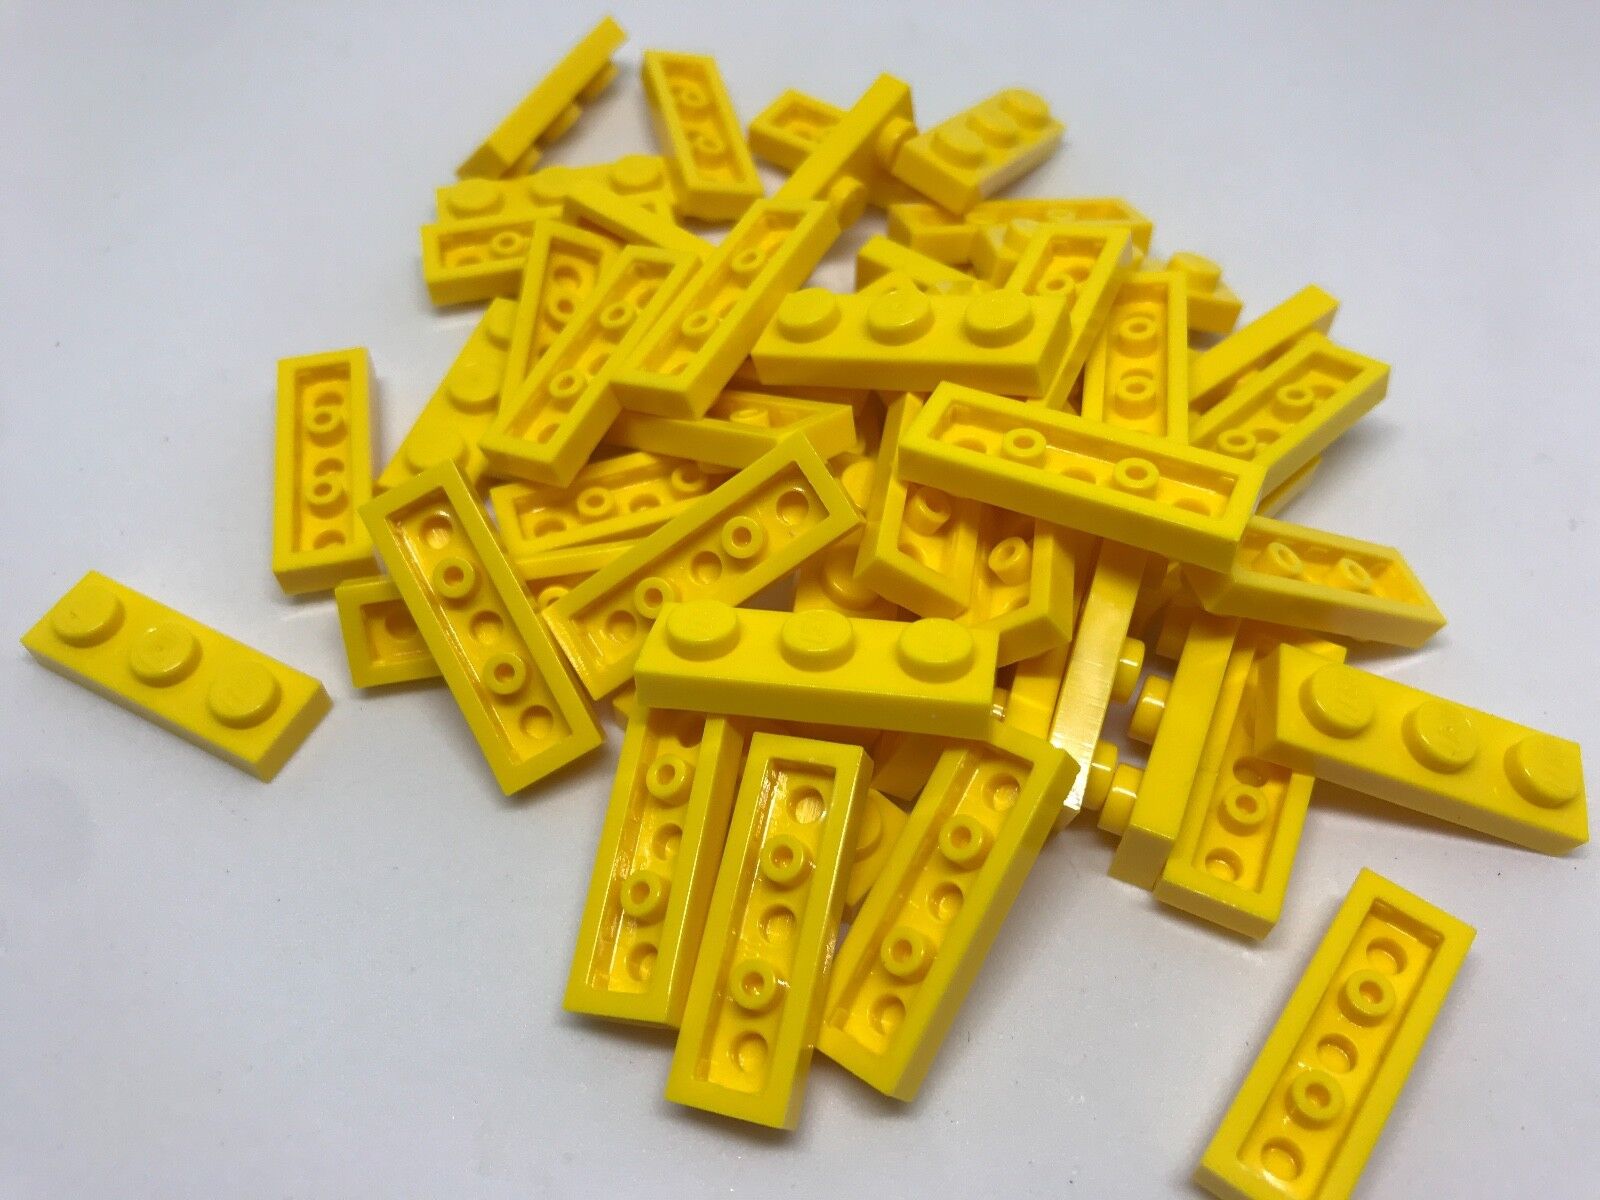 1X3 Lego 50 Piece Bulk Lot 1 x 3 Flat Plates YELLOW Building Parts #3623 LEGO Does Not Apply - фотография #2